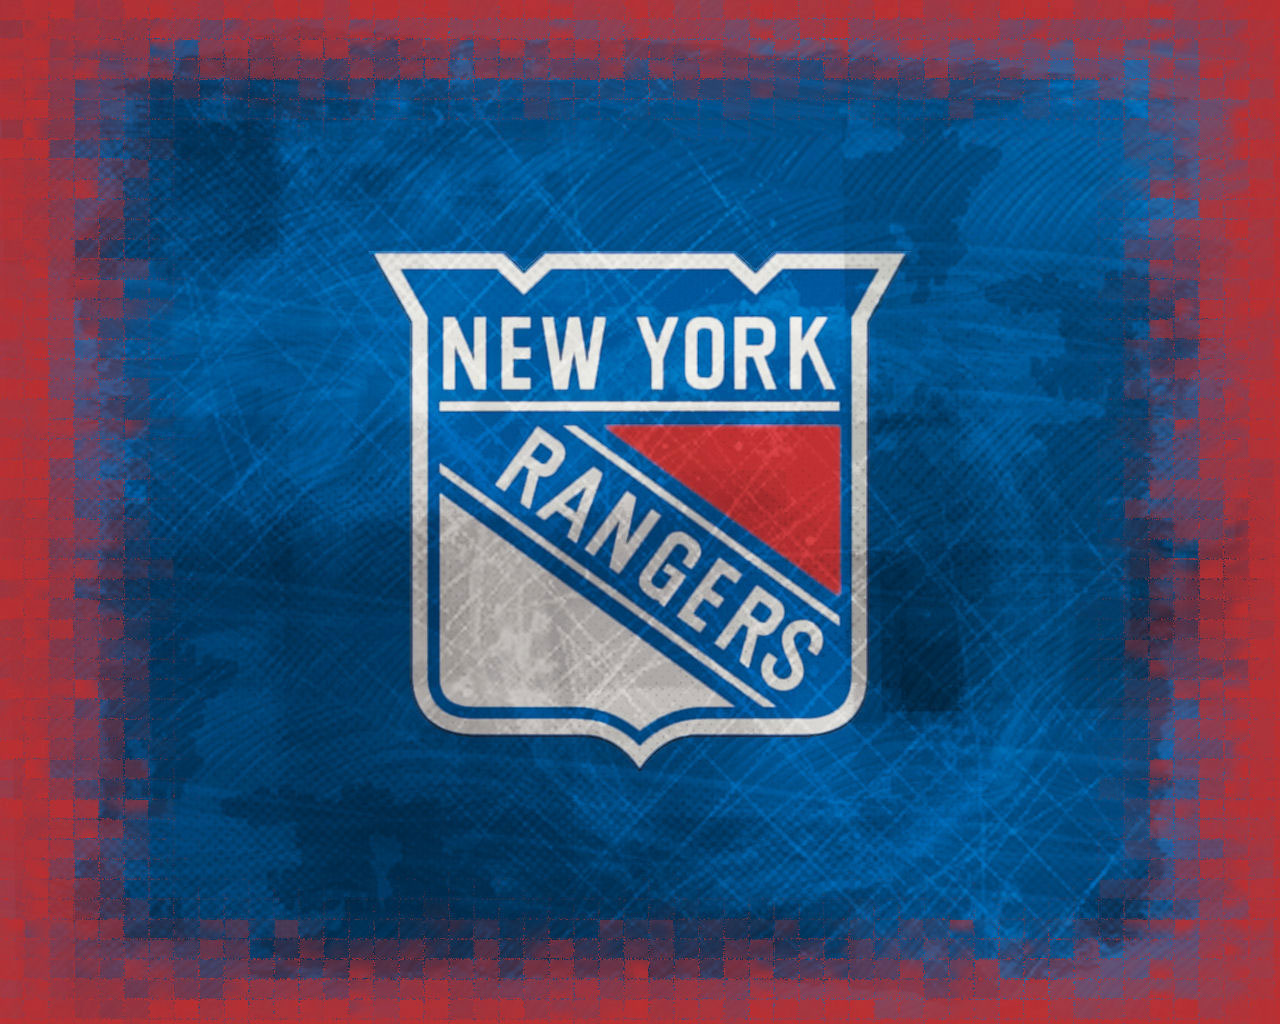 New York Rangers wallpapers New York Rangers background 1280x1024